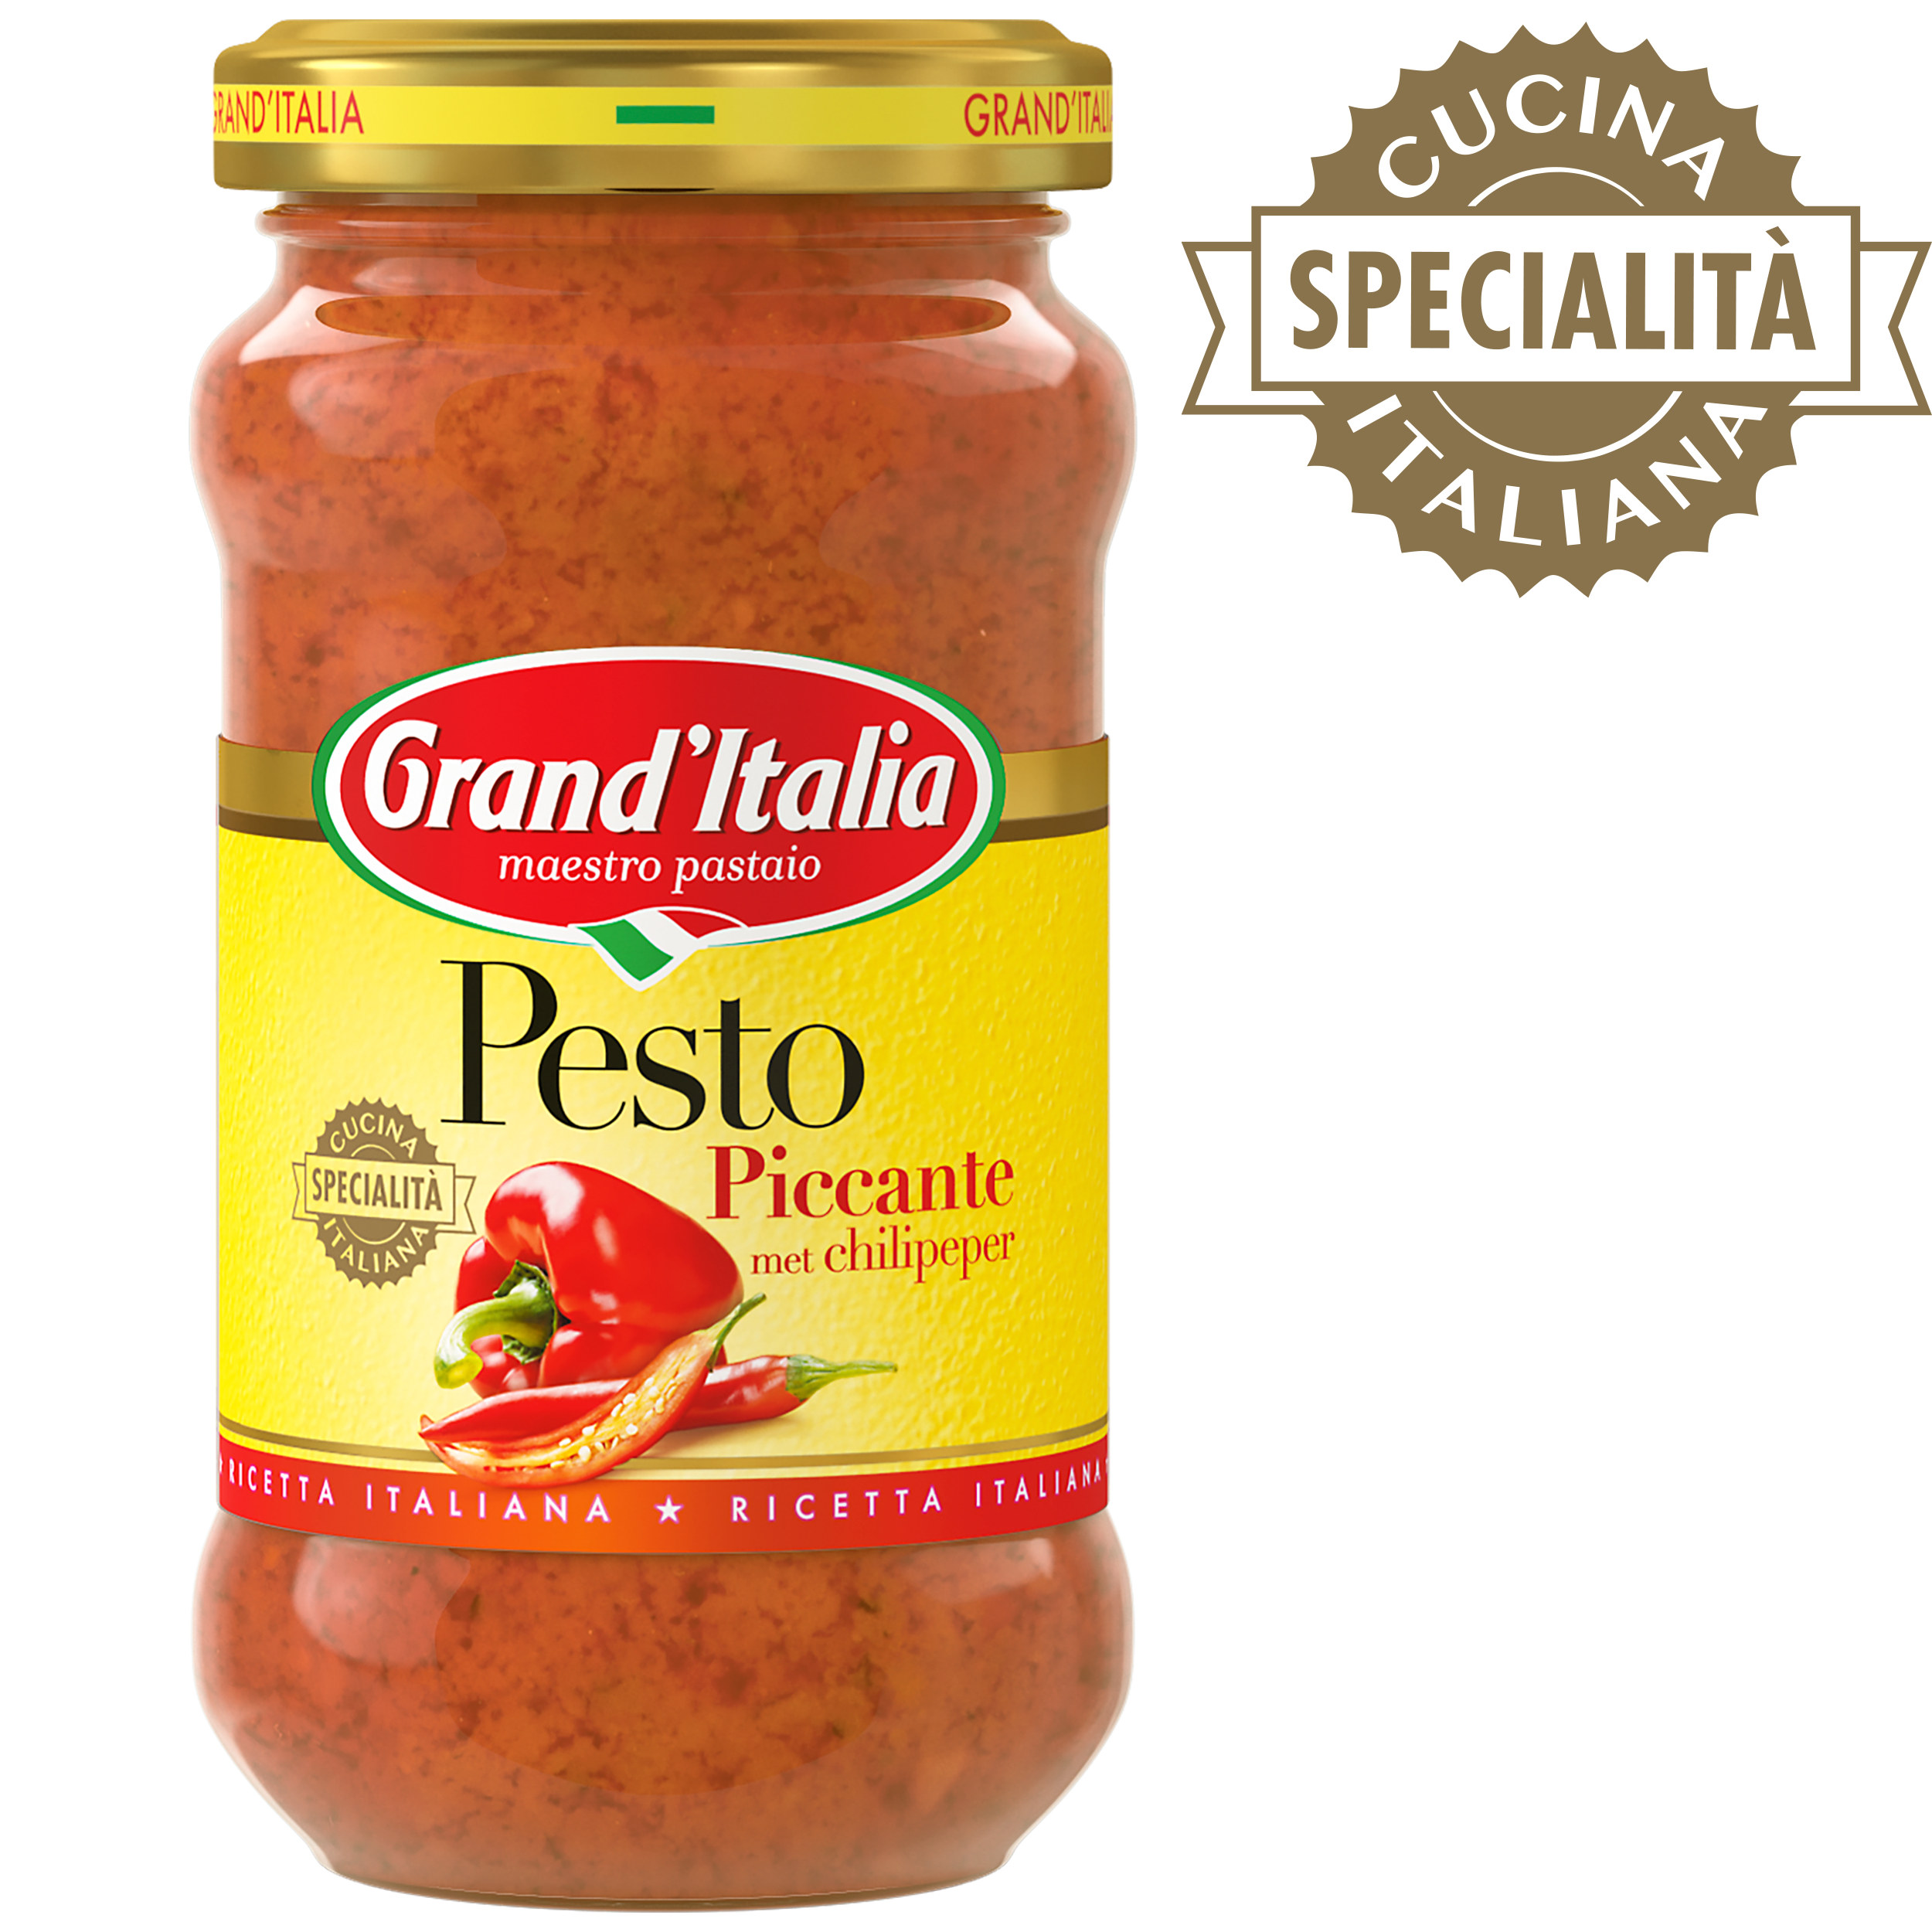 Pesto Piccante 185g Grand'Italia - claim 